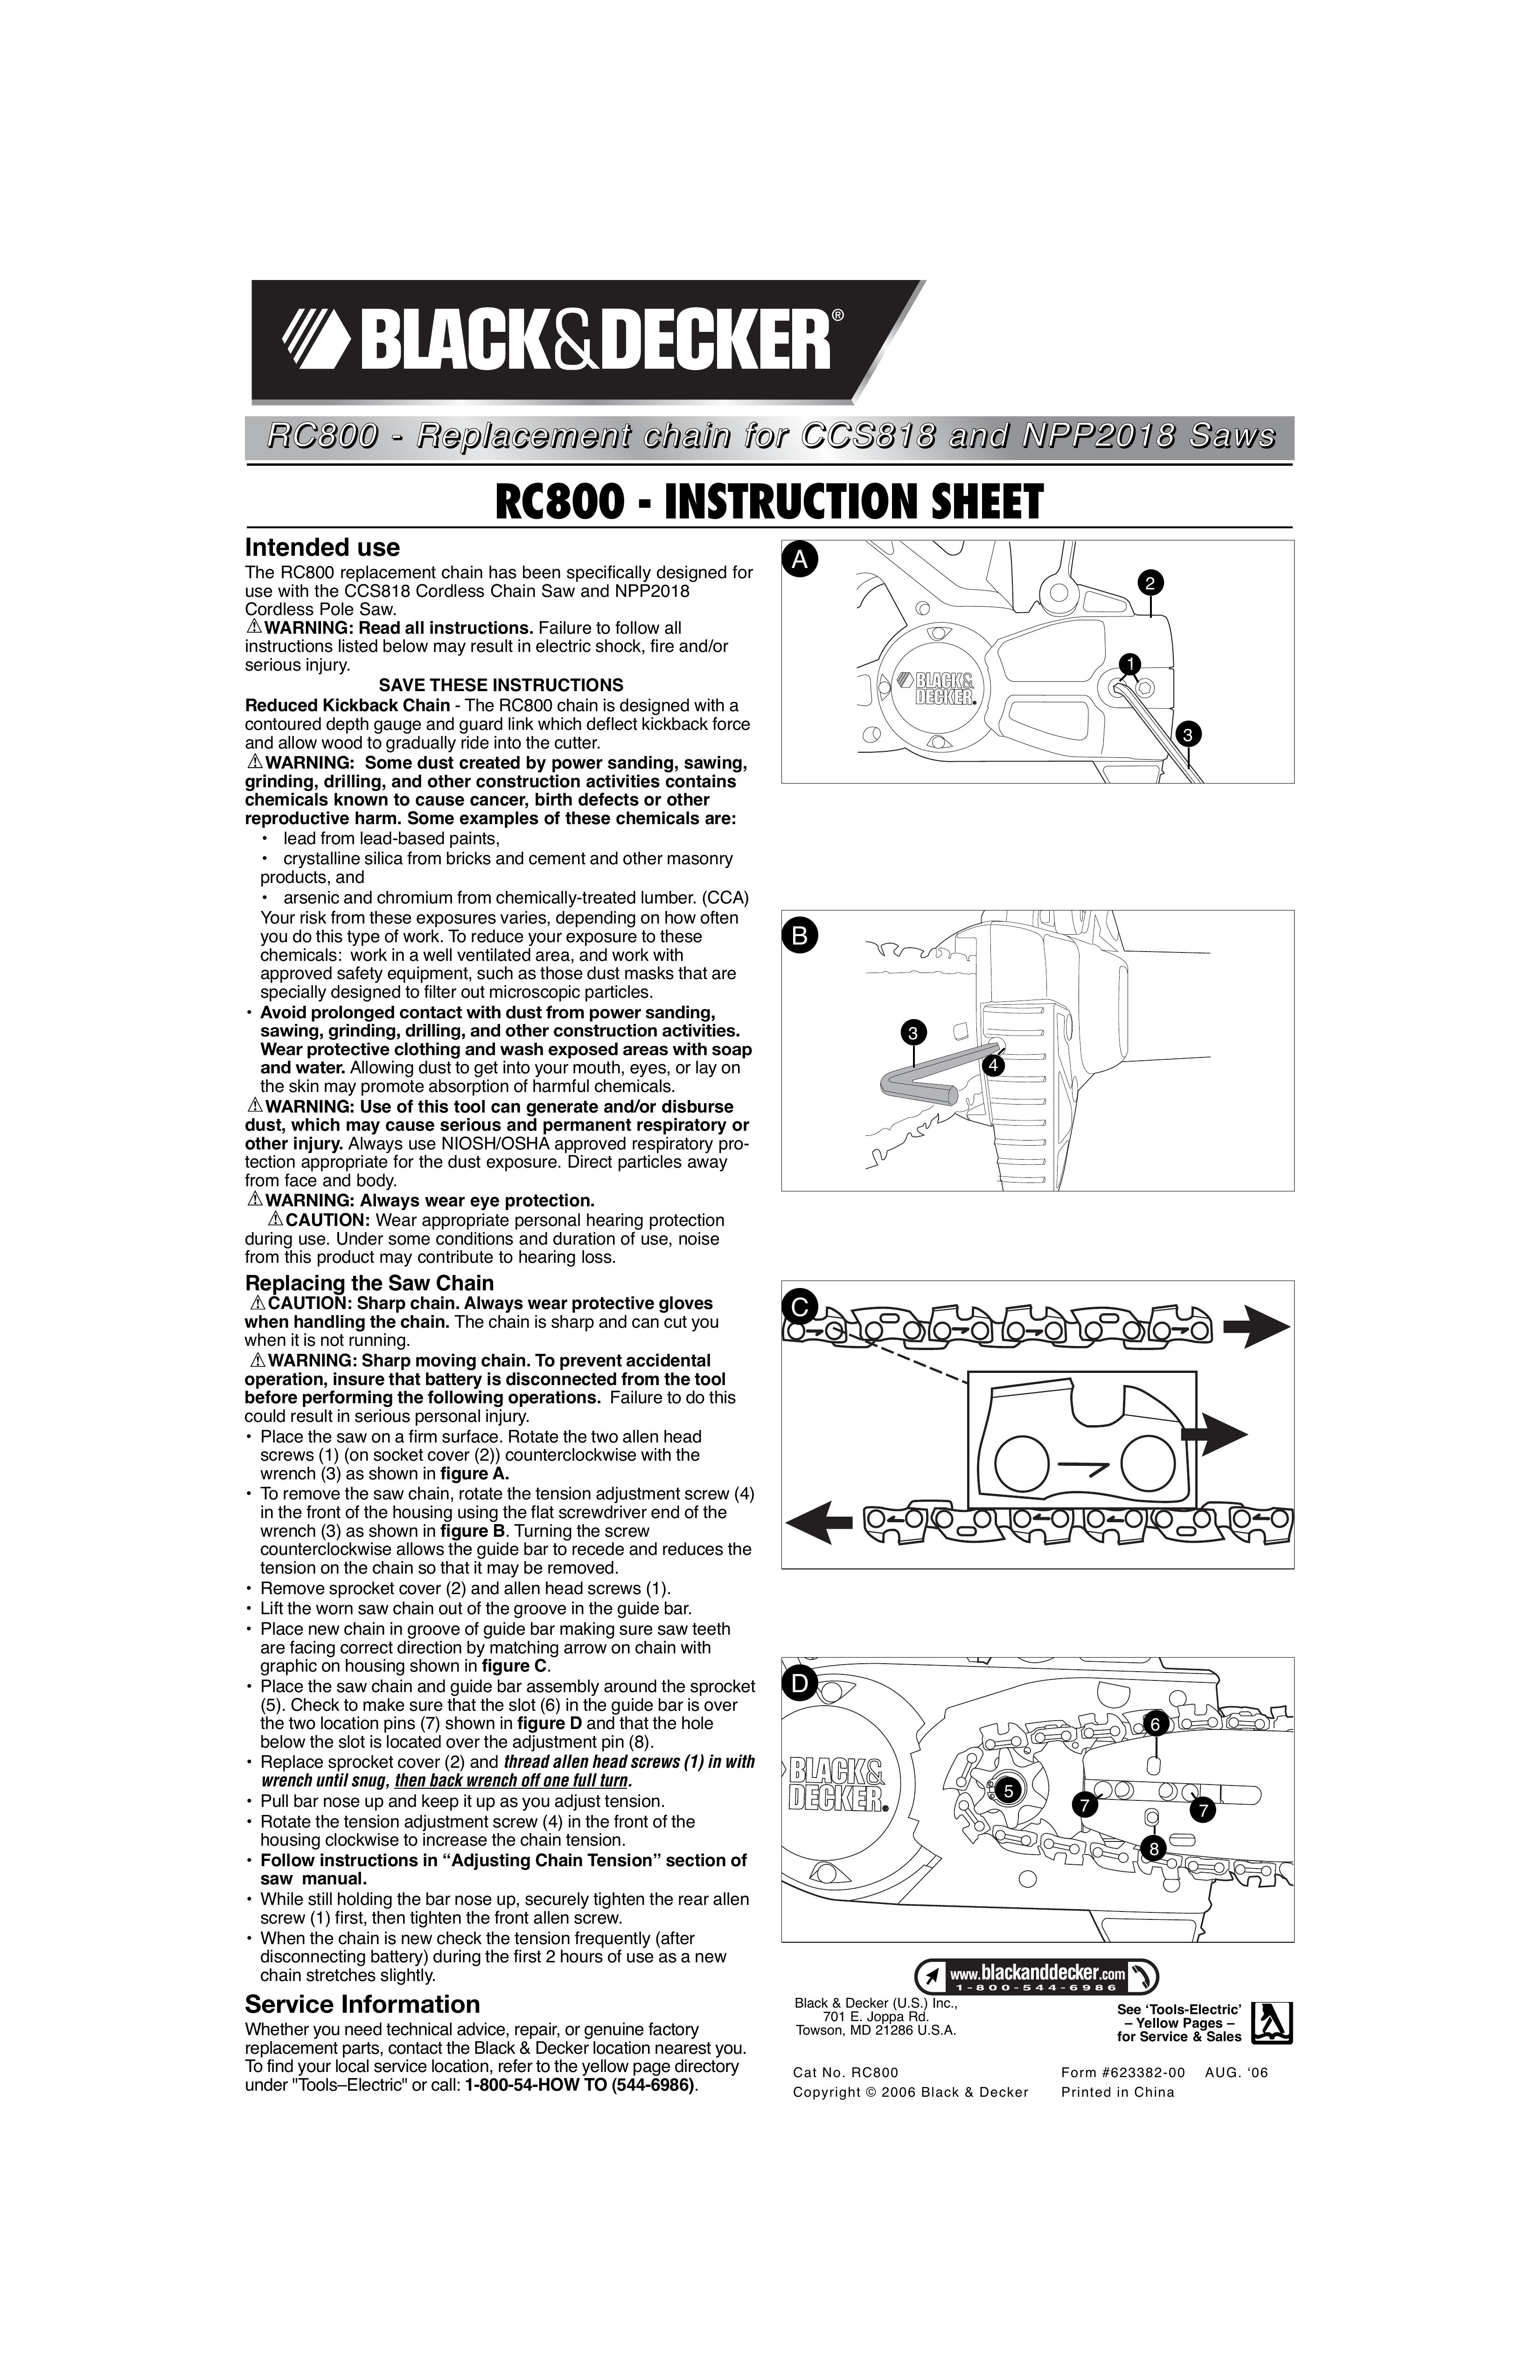 Black & Decker RC800 Rice Cooker User Manual